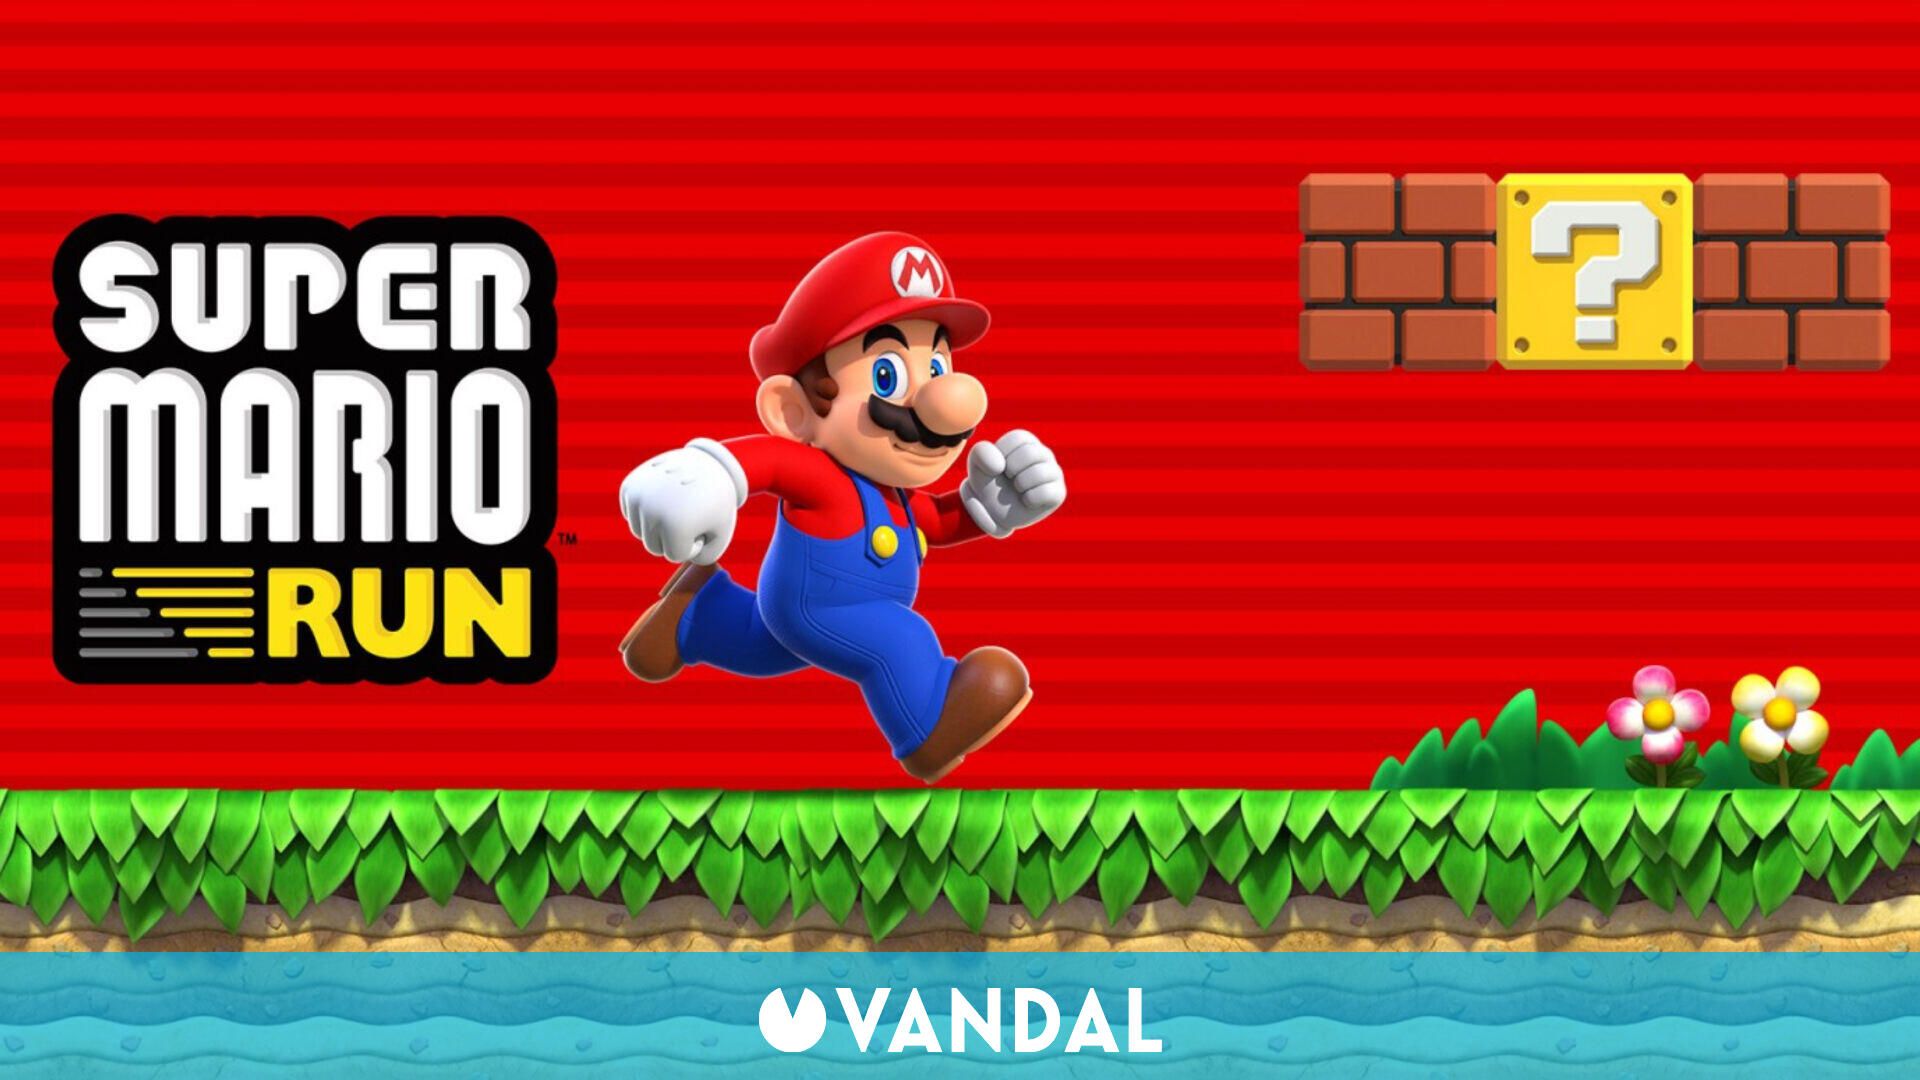 Juega gratis a niveles de pago de Super Mario Run gracias a una promoción - Vandal